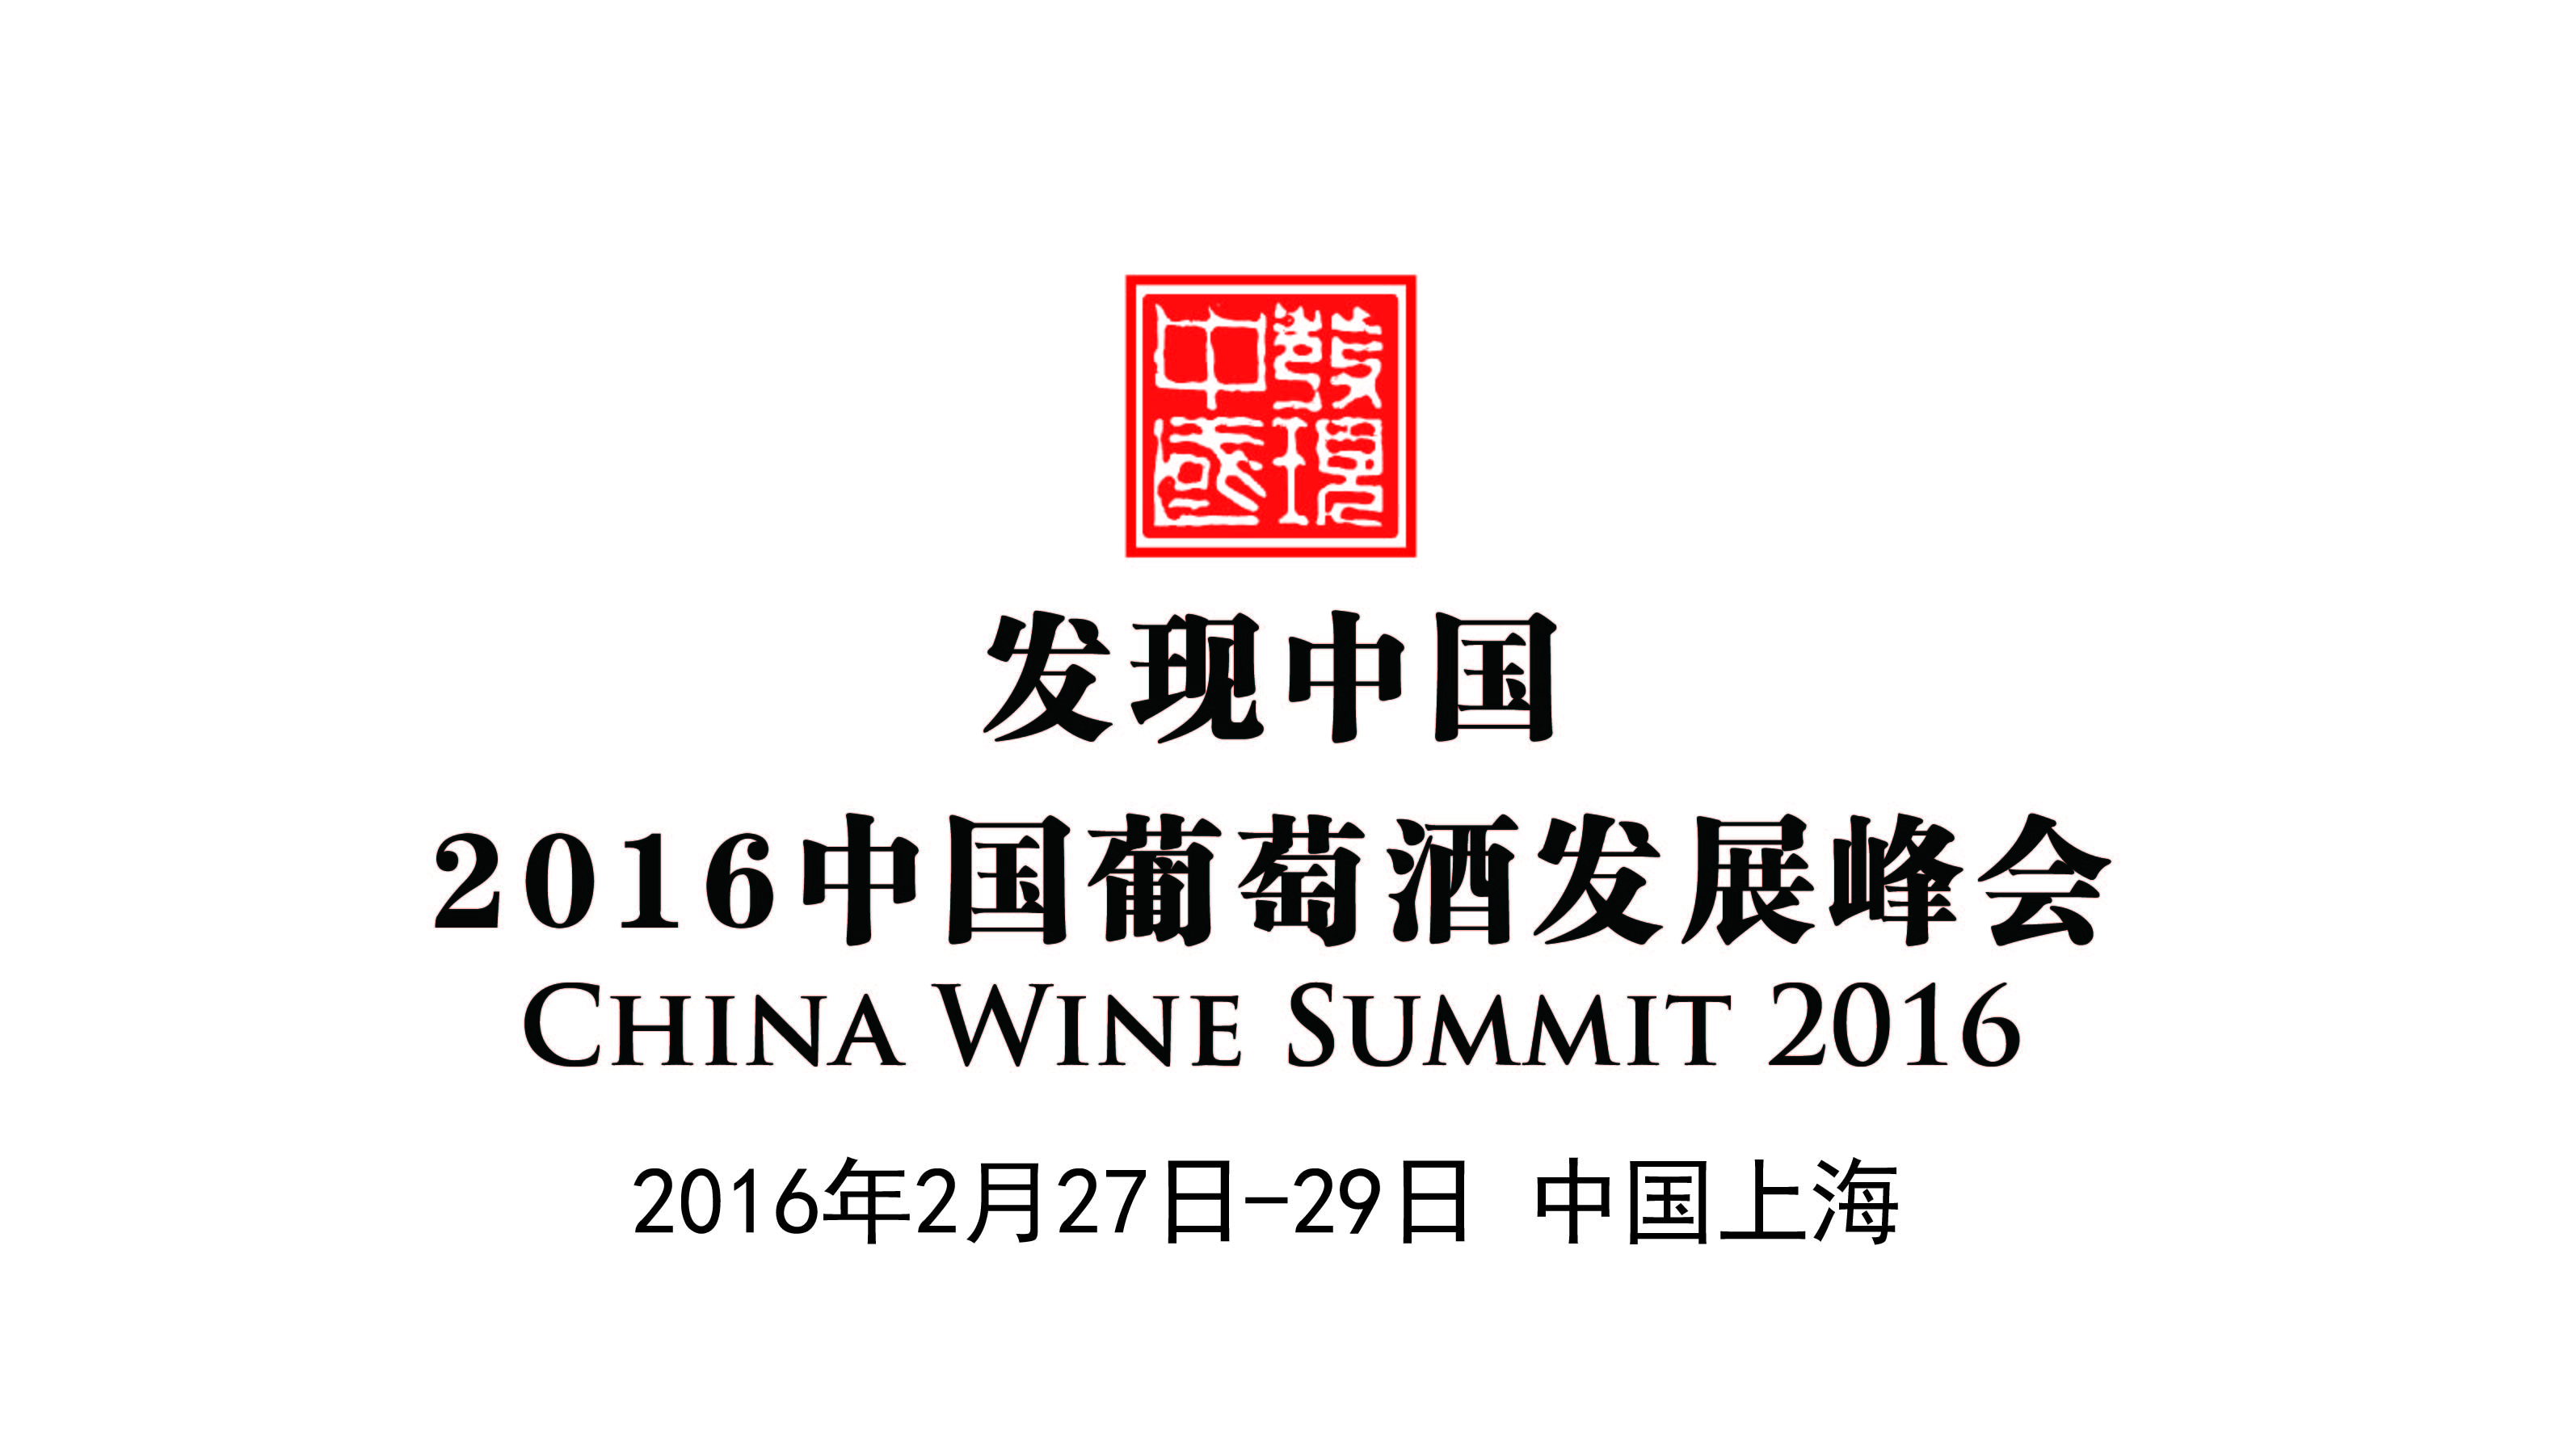 China Wine Summit